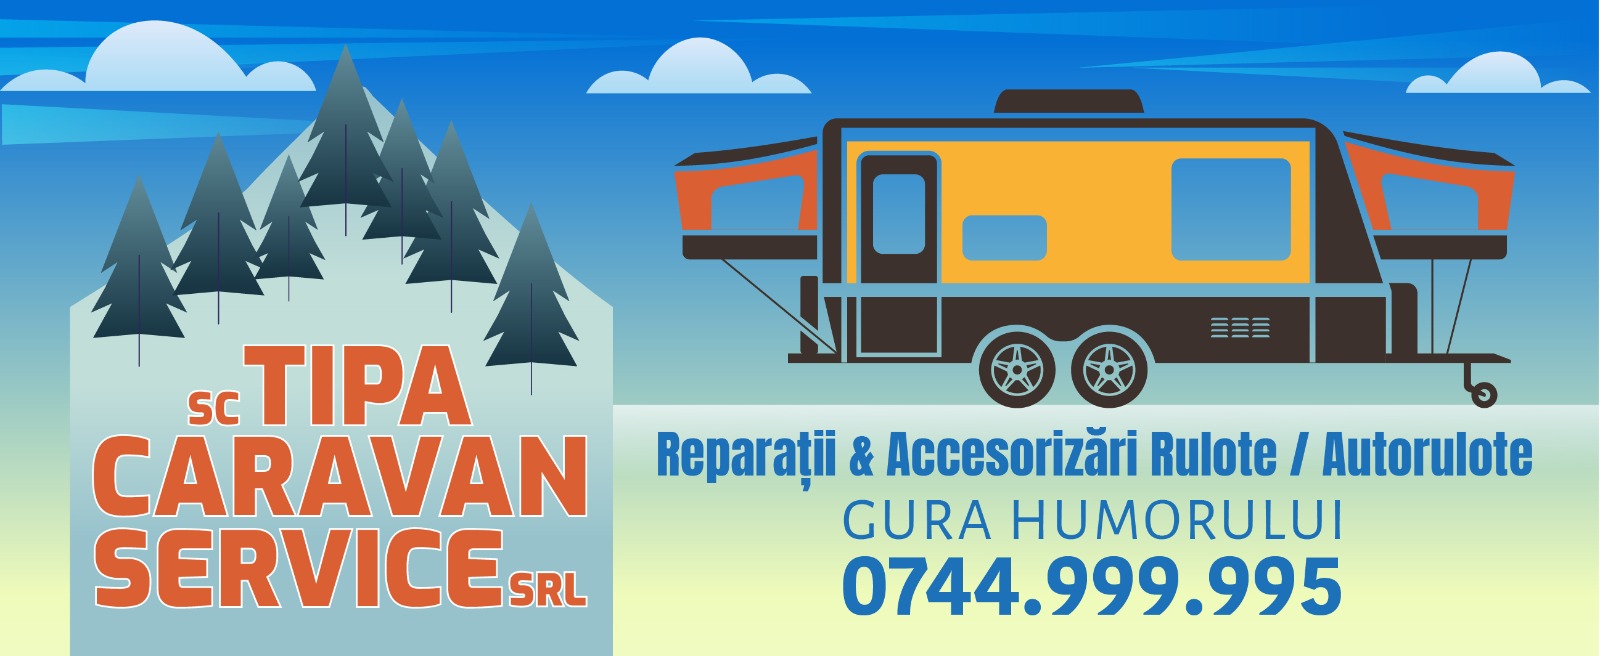 Tipa Caravan Service